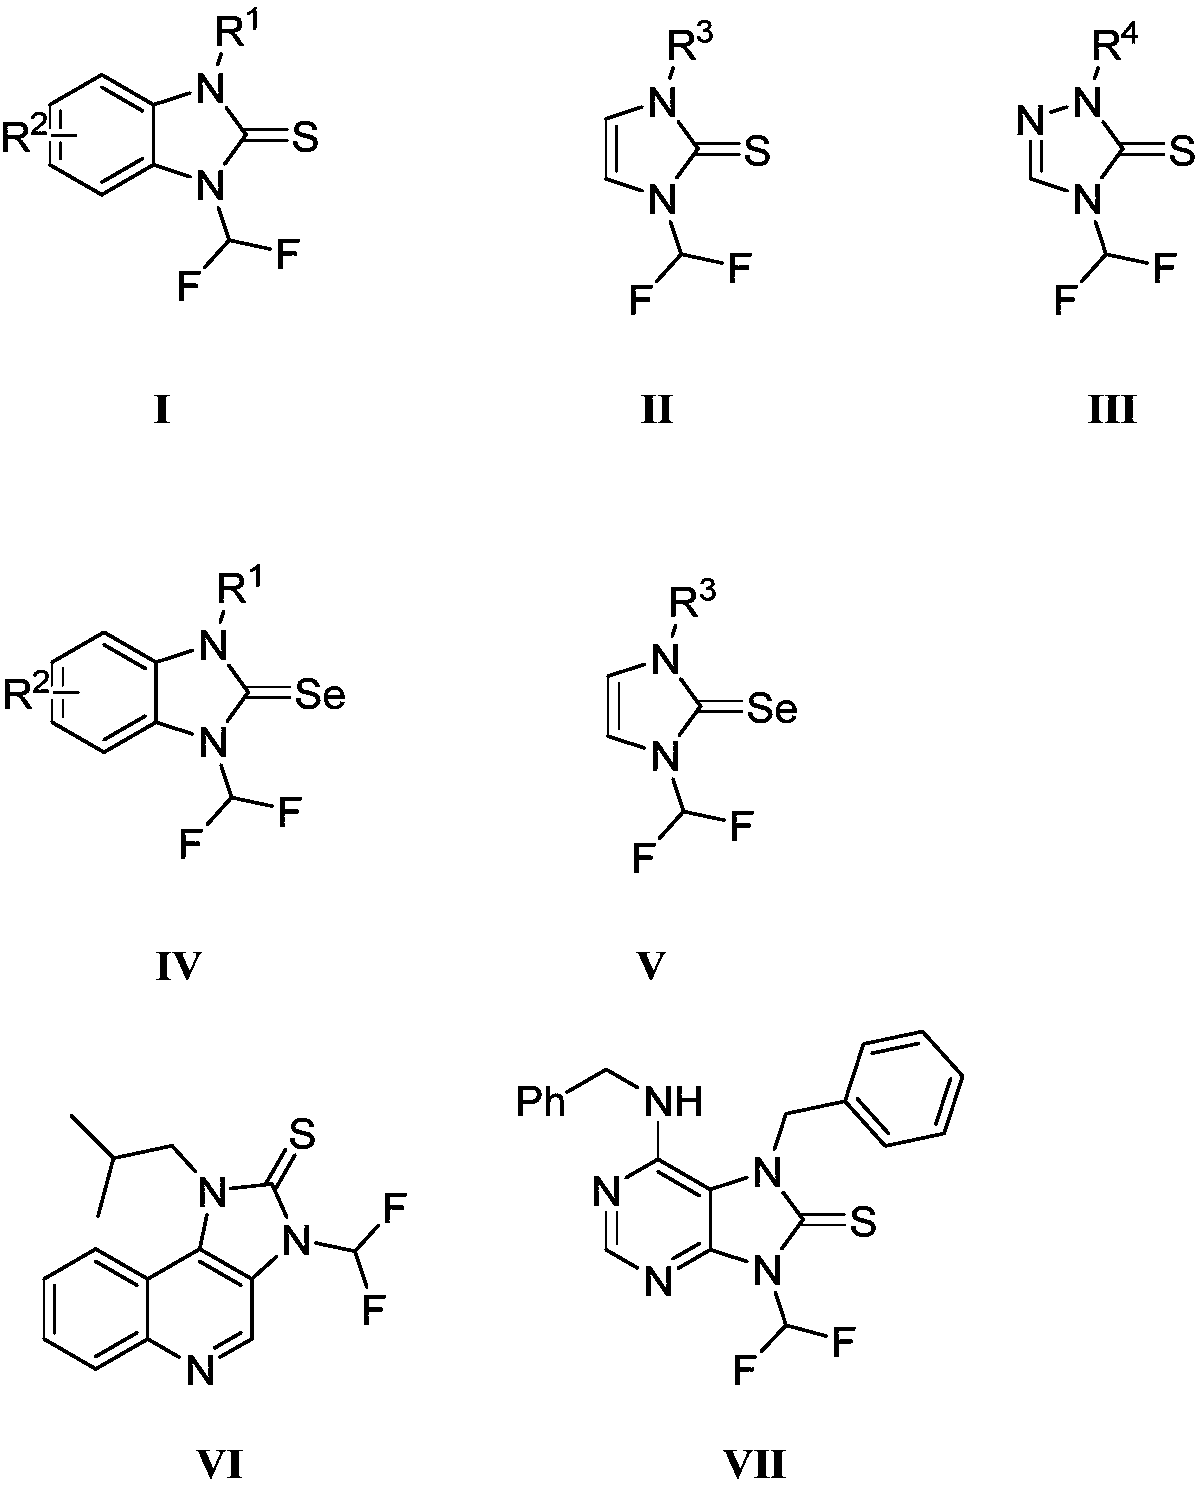 N-difluoromethylazole sulfur (selenium) urea derivative and preparation method thereof